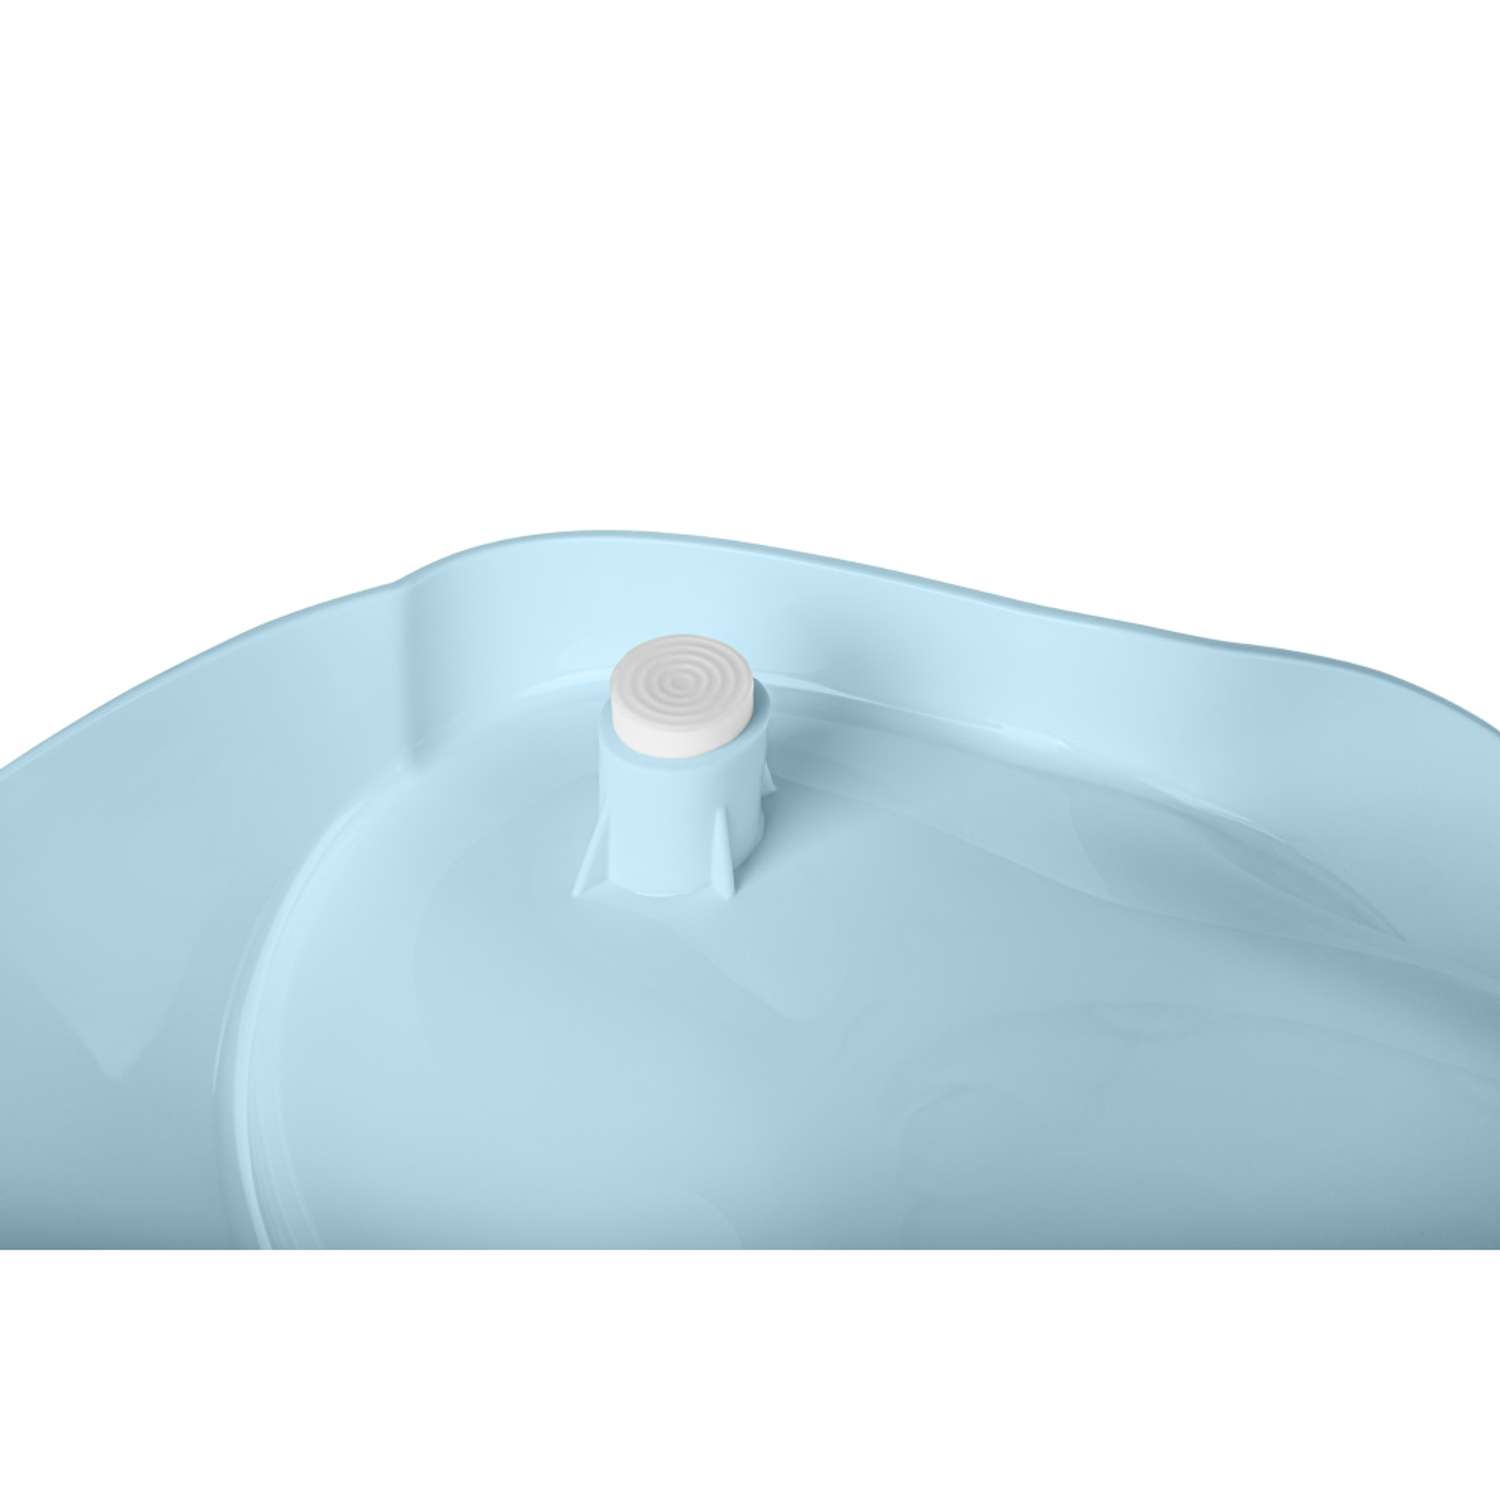 Горка для купания Пластишка светло-голубая - фото 6